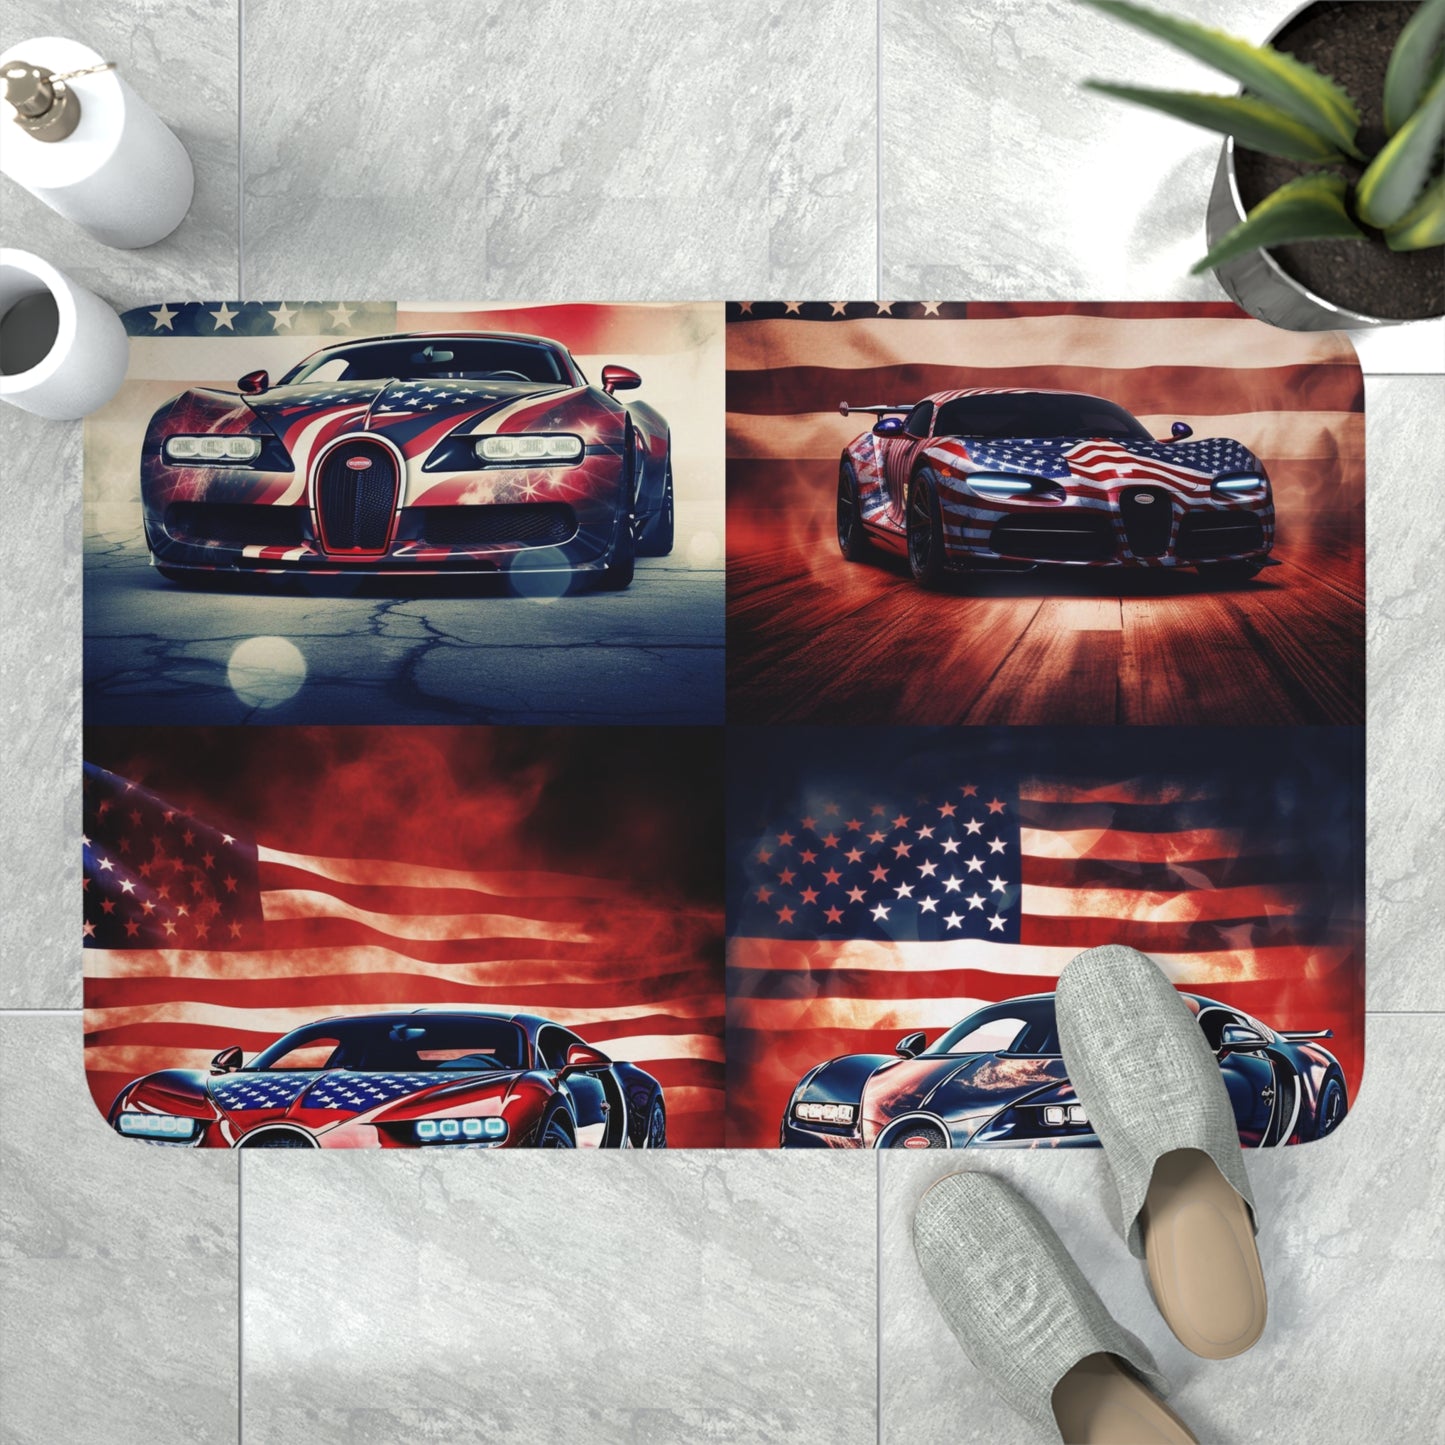 Memory Foam Bath Mat Abstract American Flag Background Bugatti 5